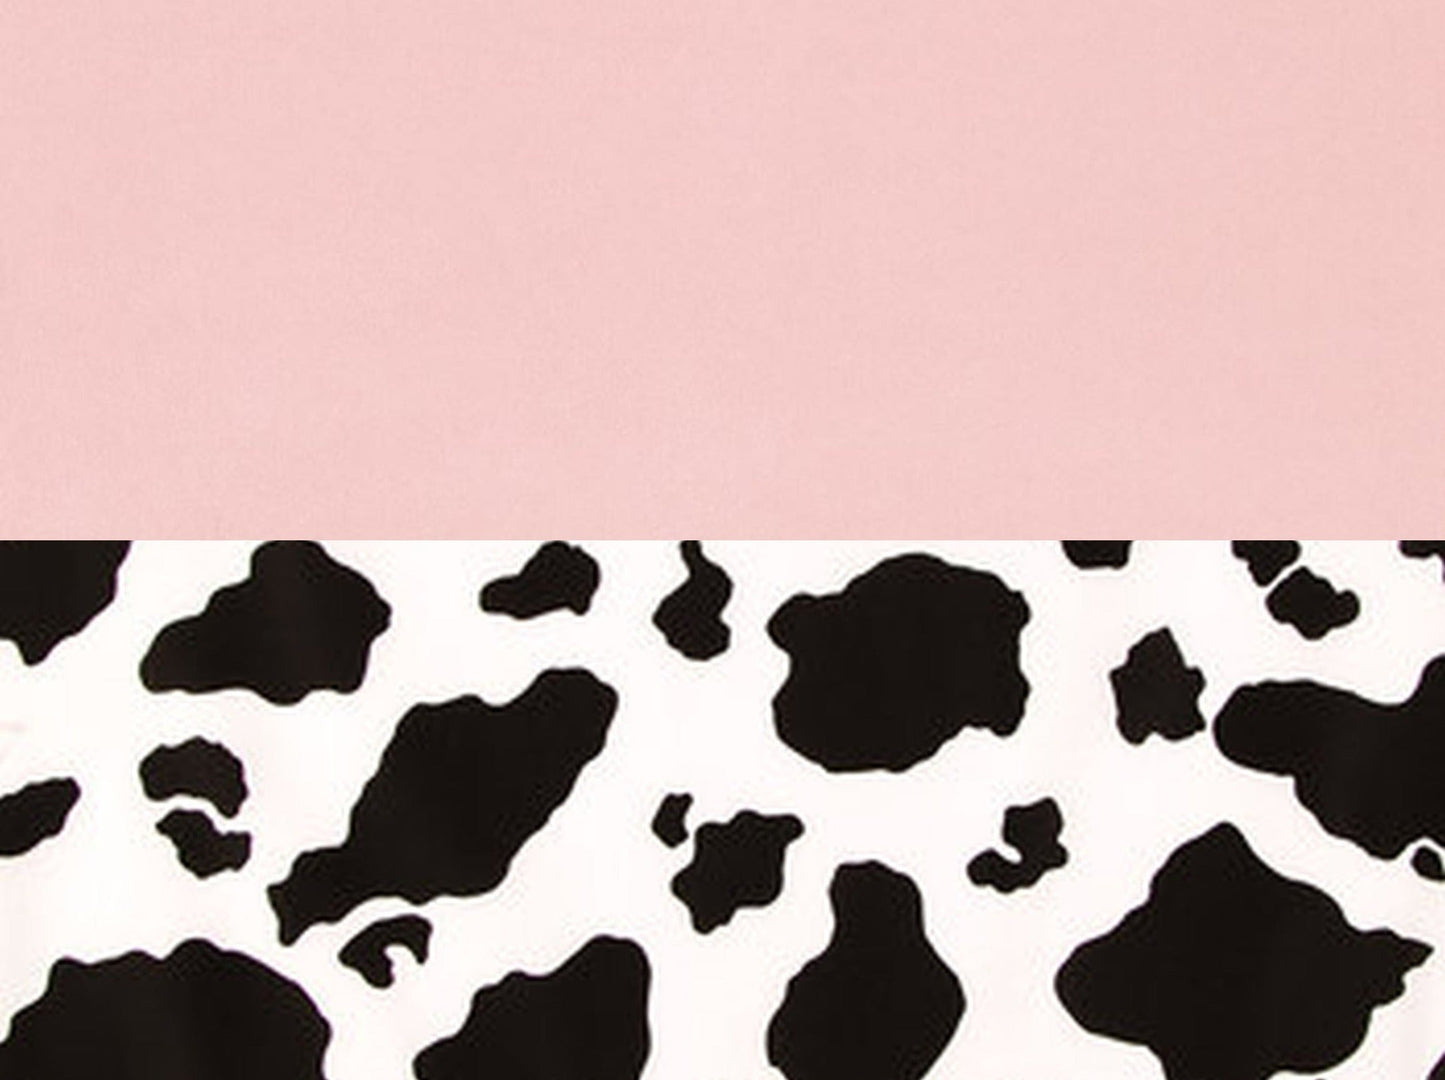 Pink Cow Print Crib Bedding, Baby Girl Farm Animal Crib Set - The Creative Raccoon